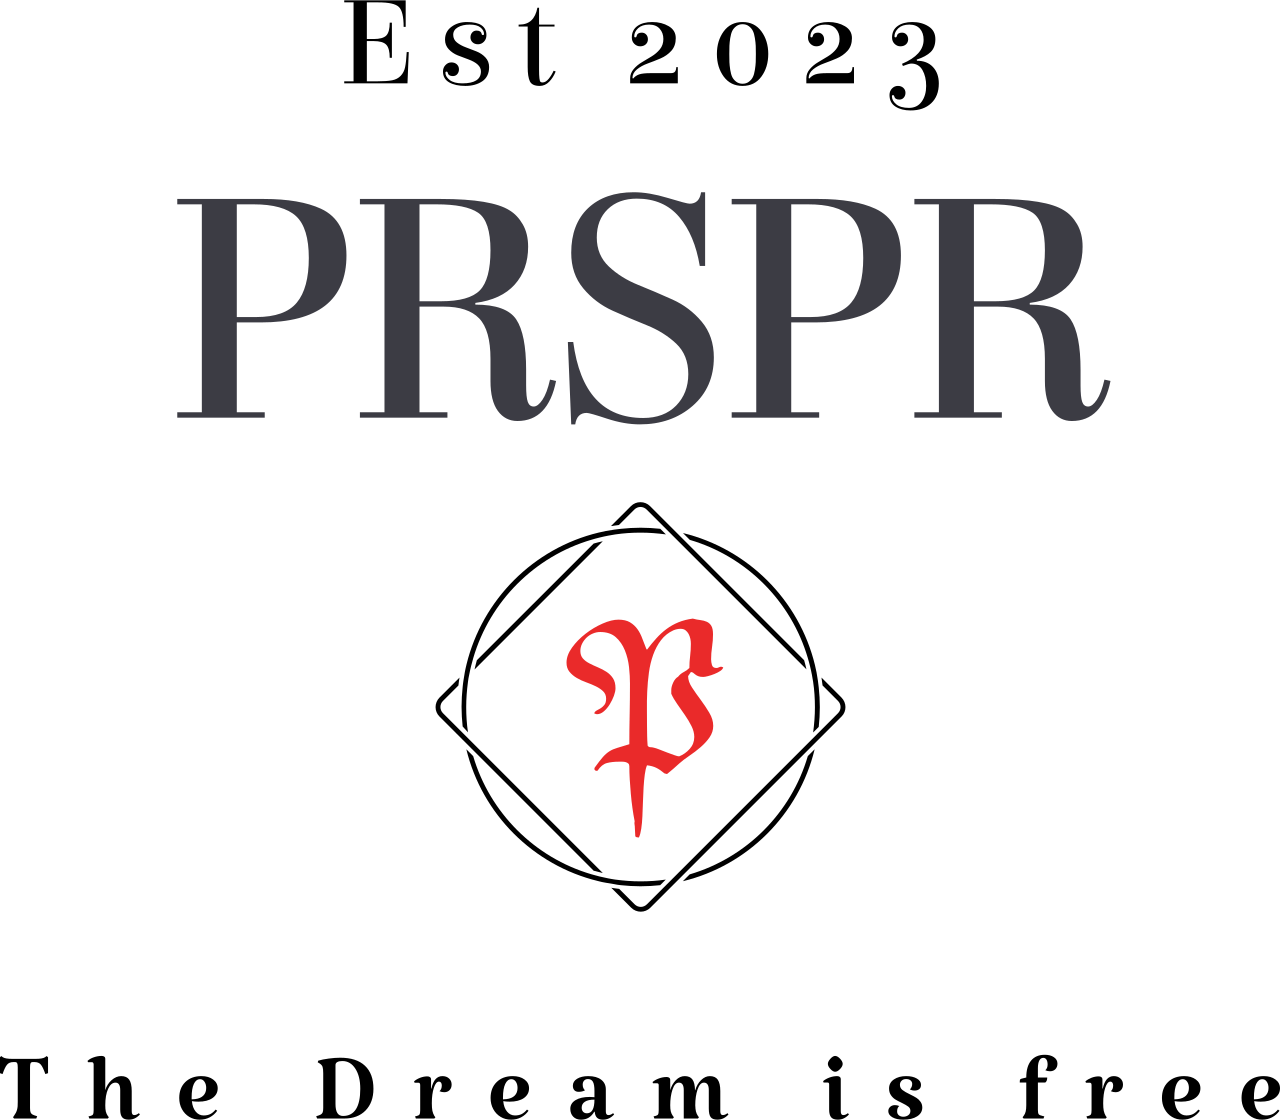 PRSPR's logo